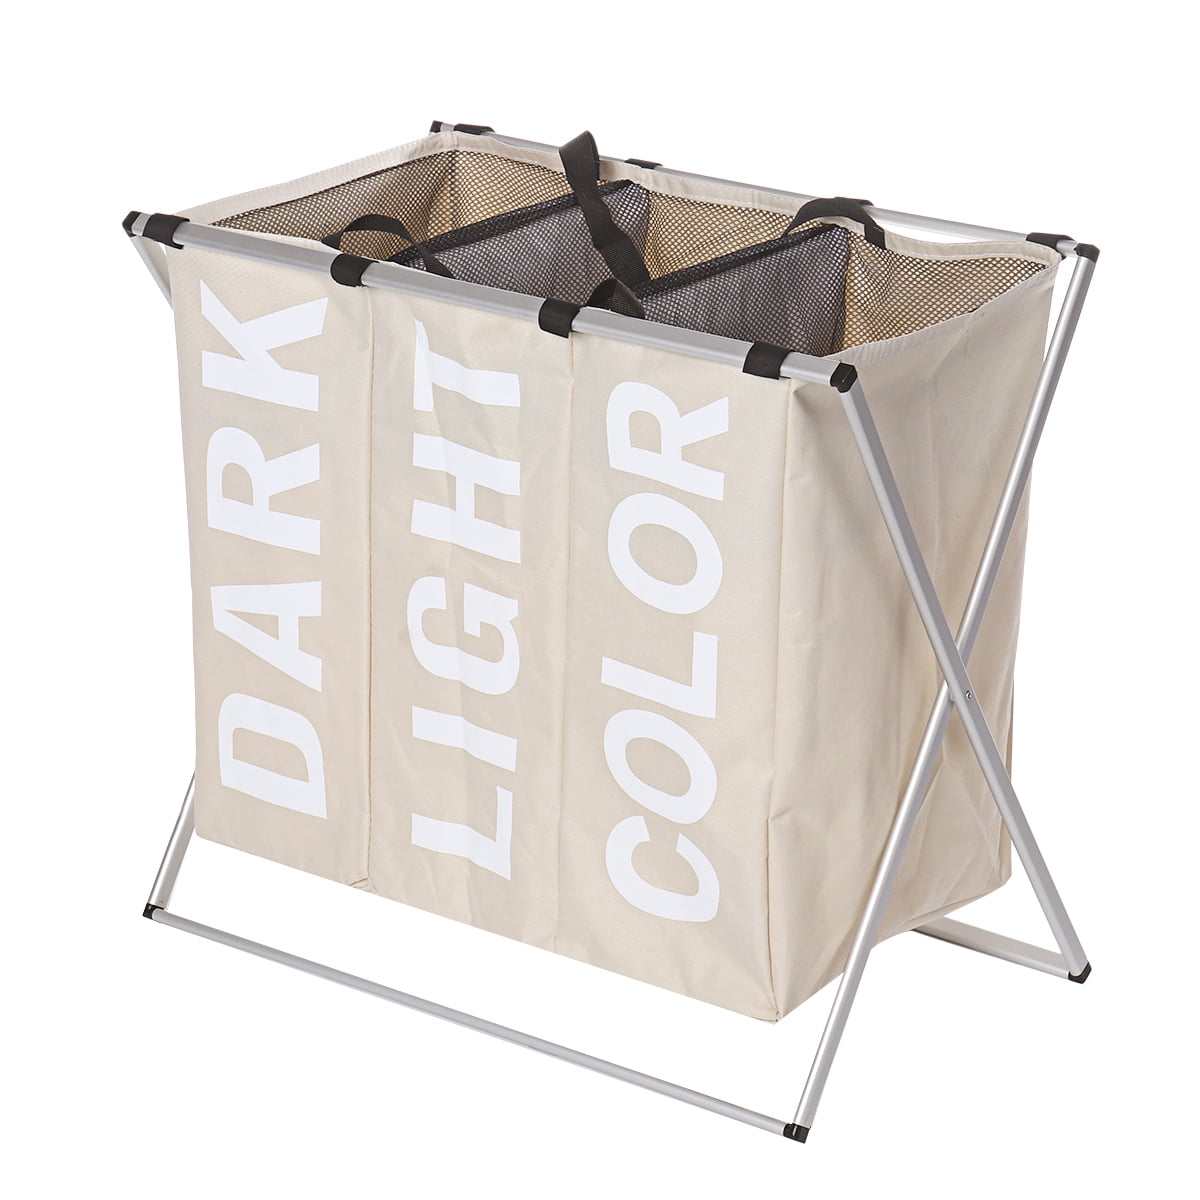 Portable Large Laundry Basket Hamper Box Dirty Clothes Storage Organizer New 